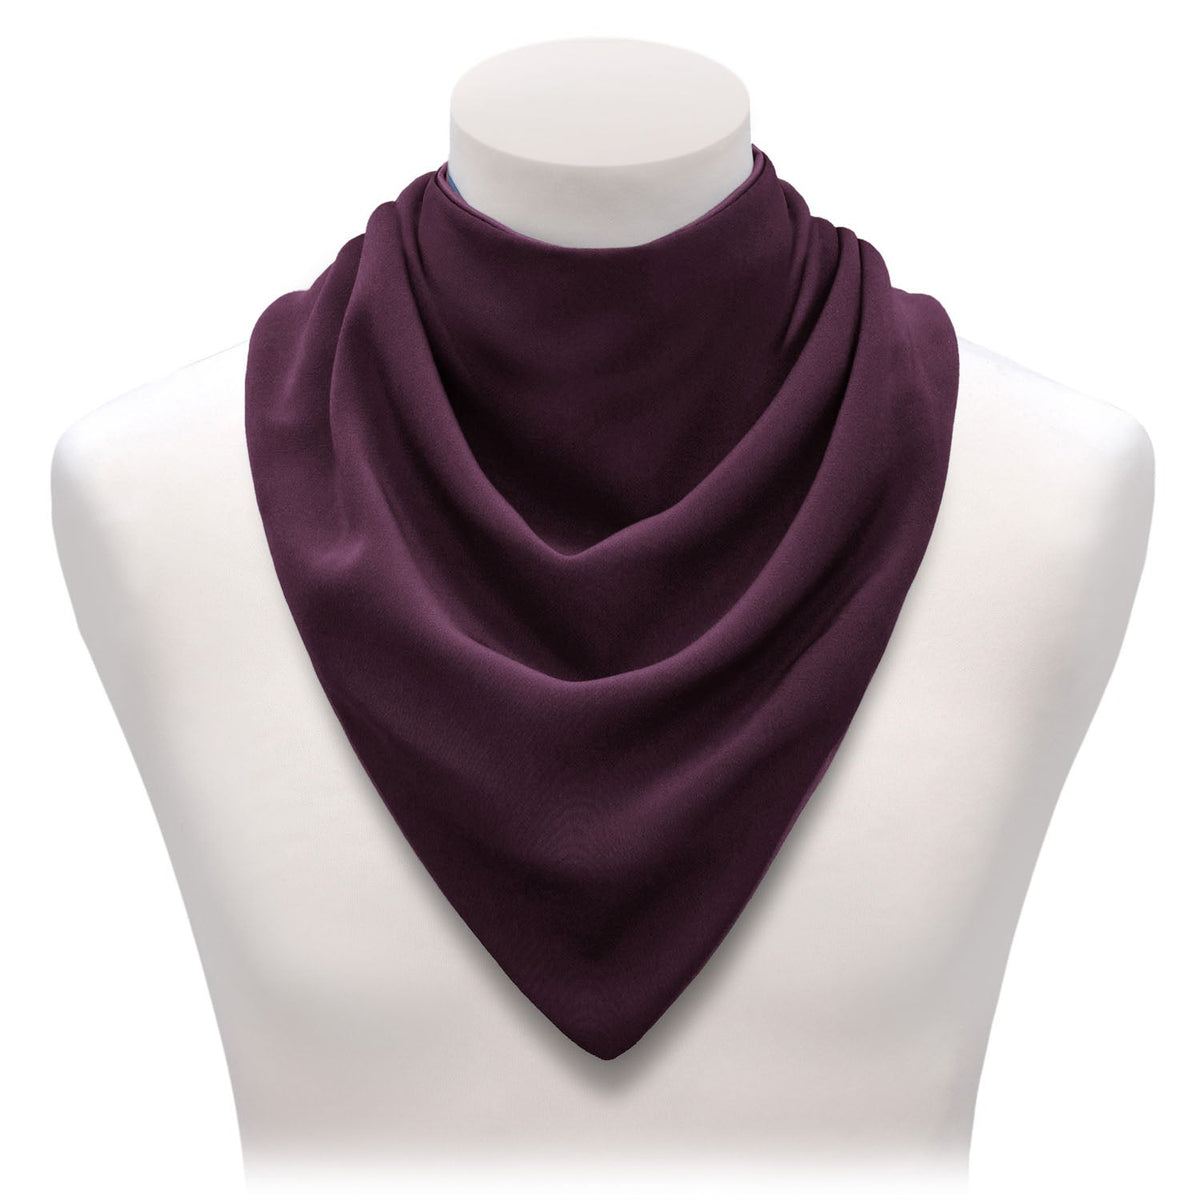 Large neckerchief style dribble bib - Aubergine (UK VAT Exempt) | Health Care | Care Designs